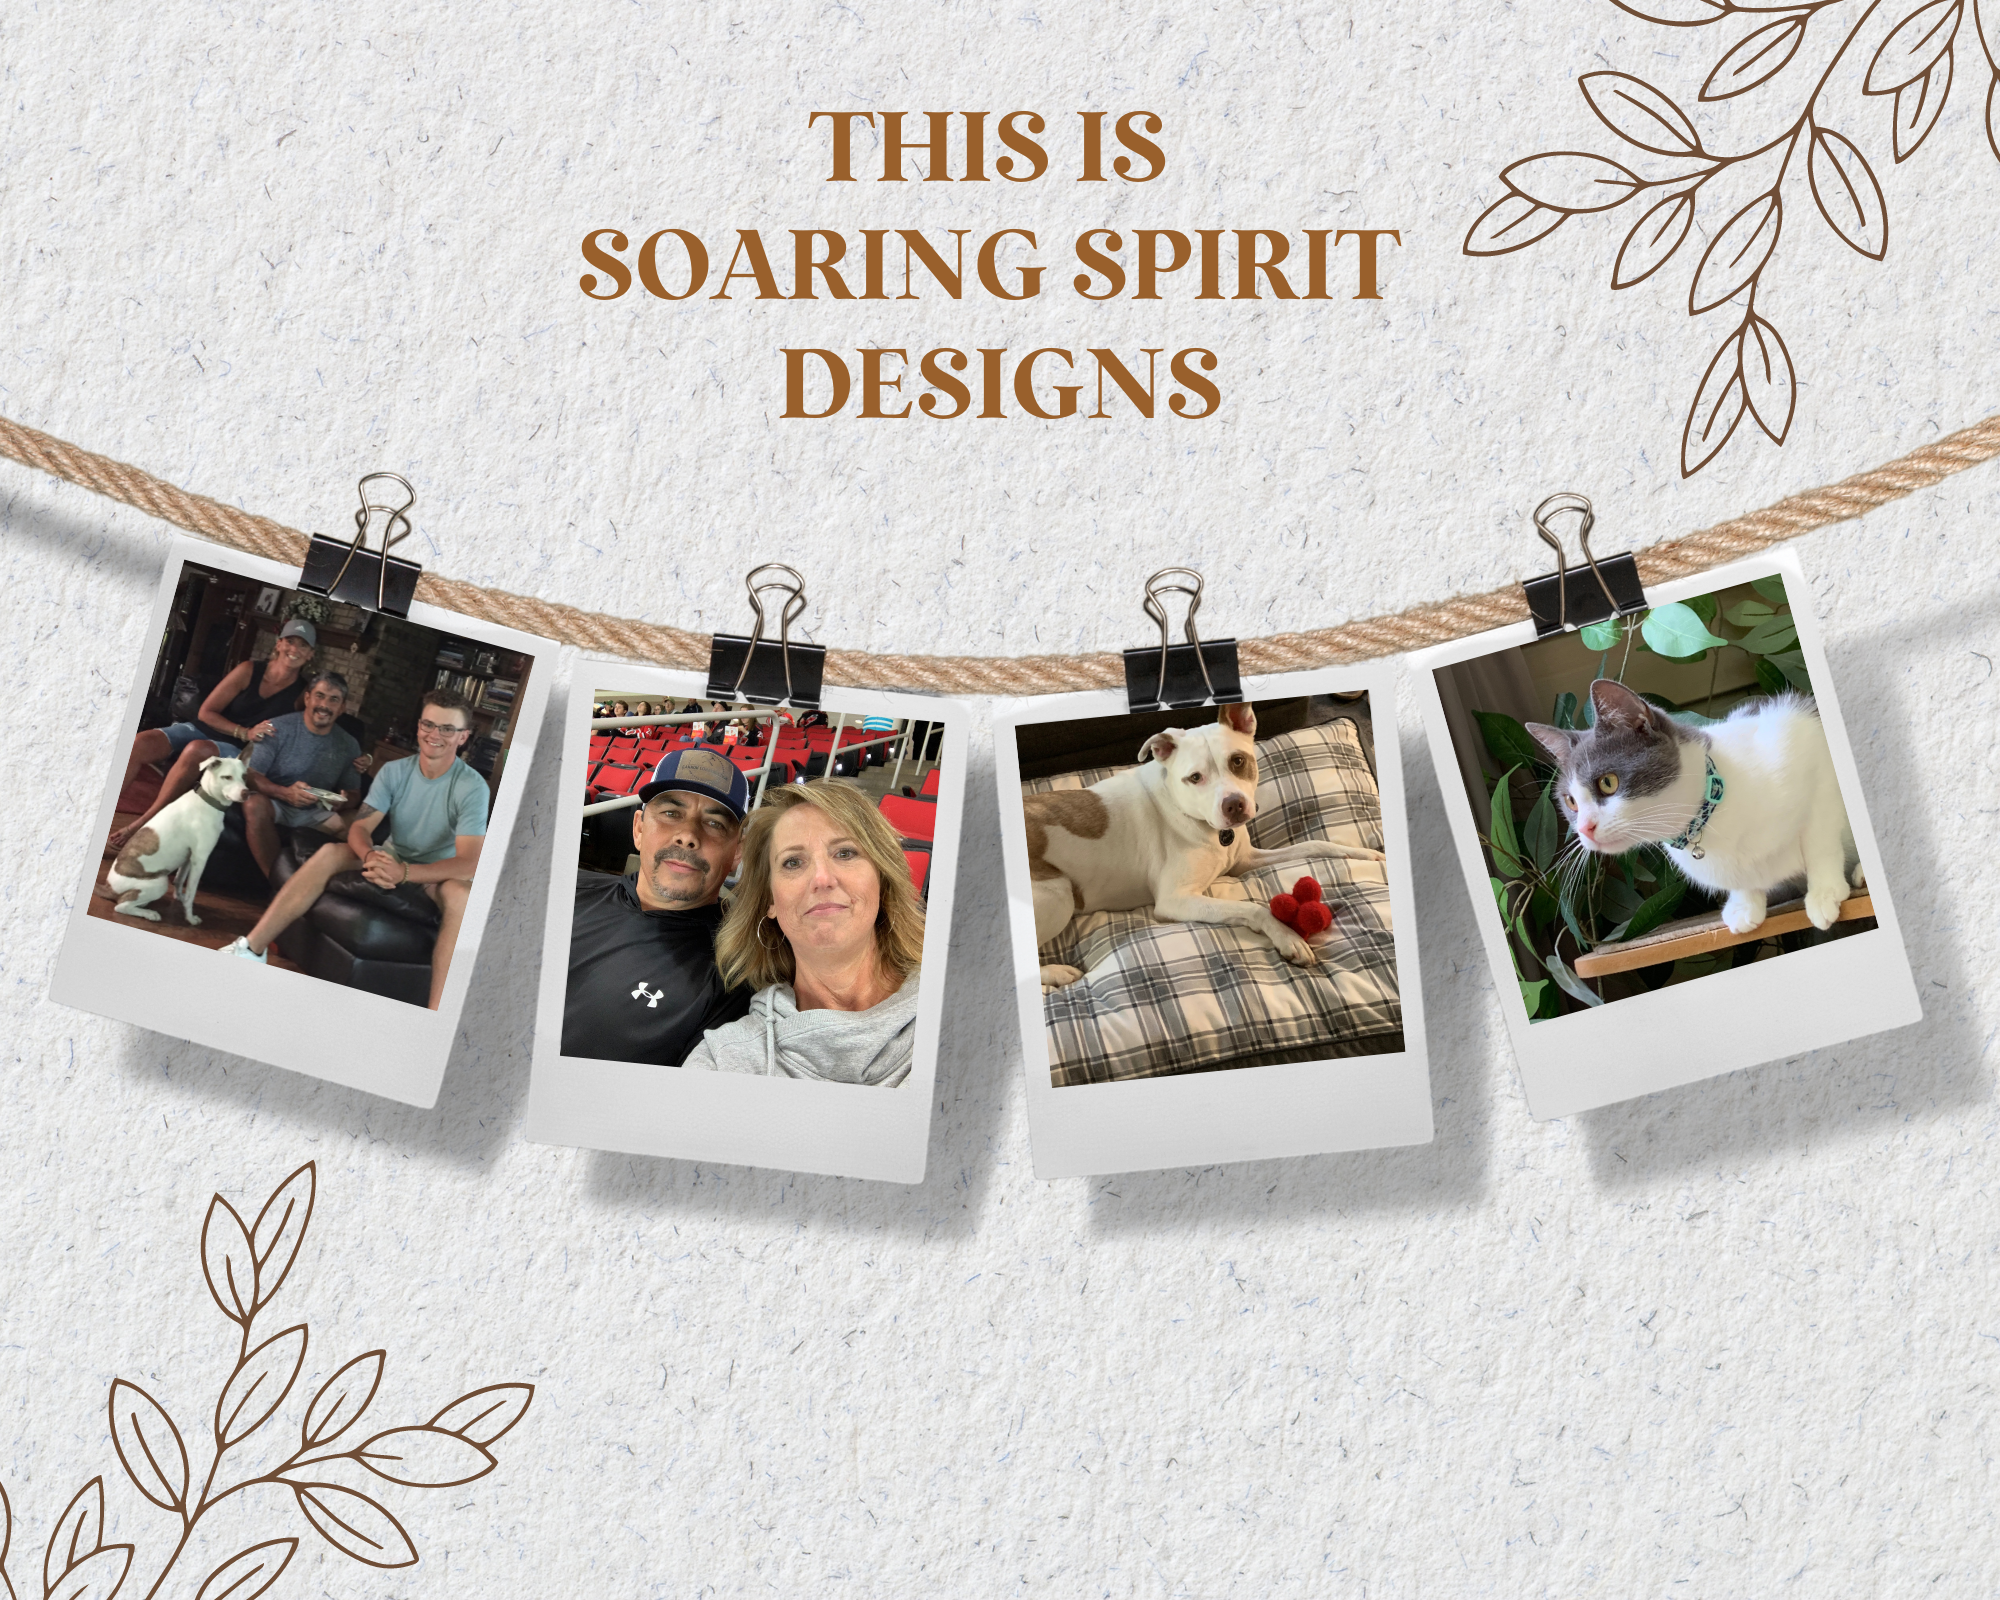 Soaring Spirit Designs